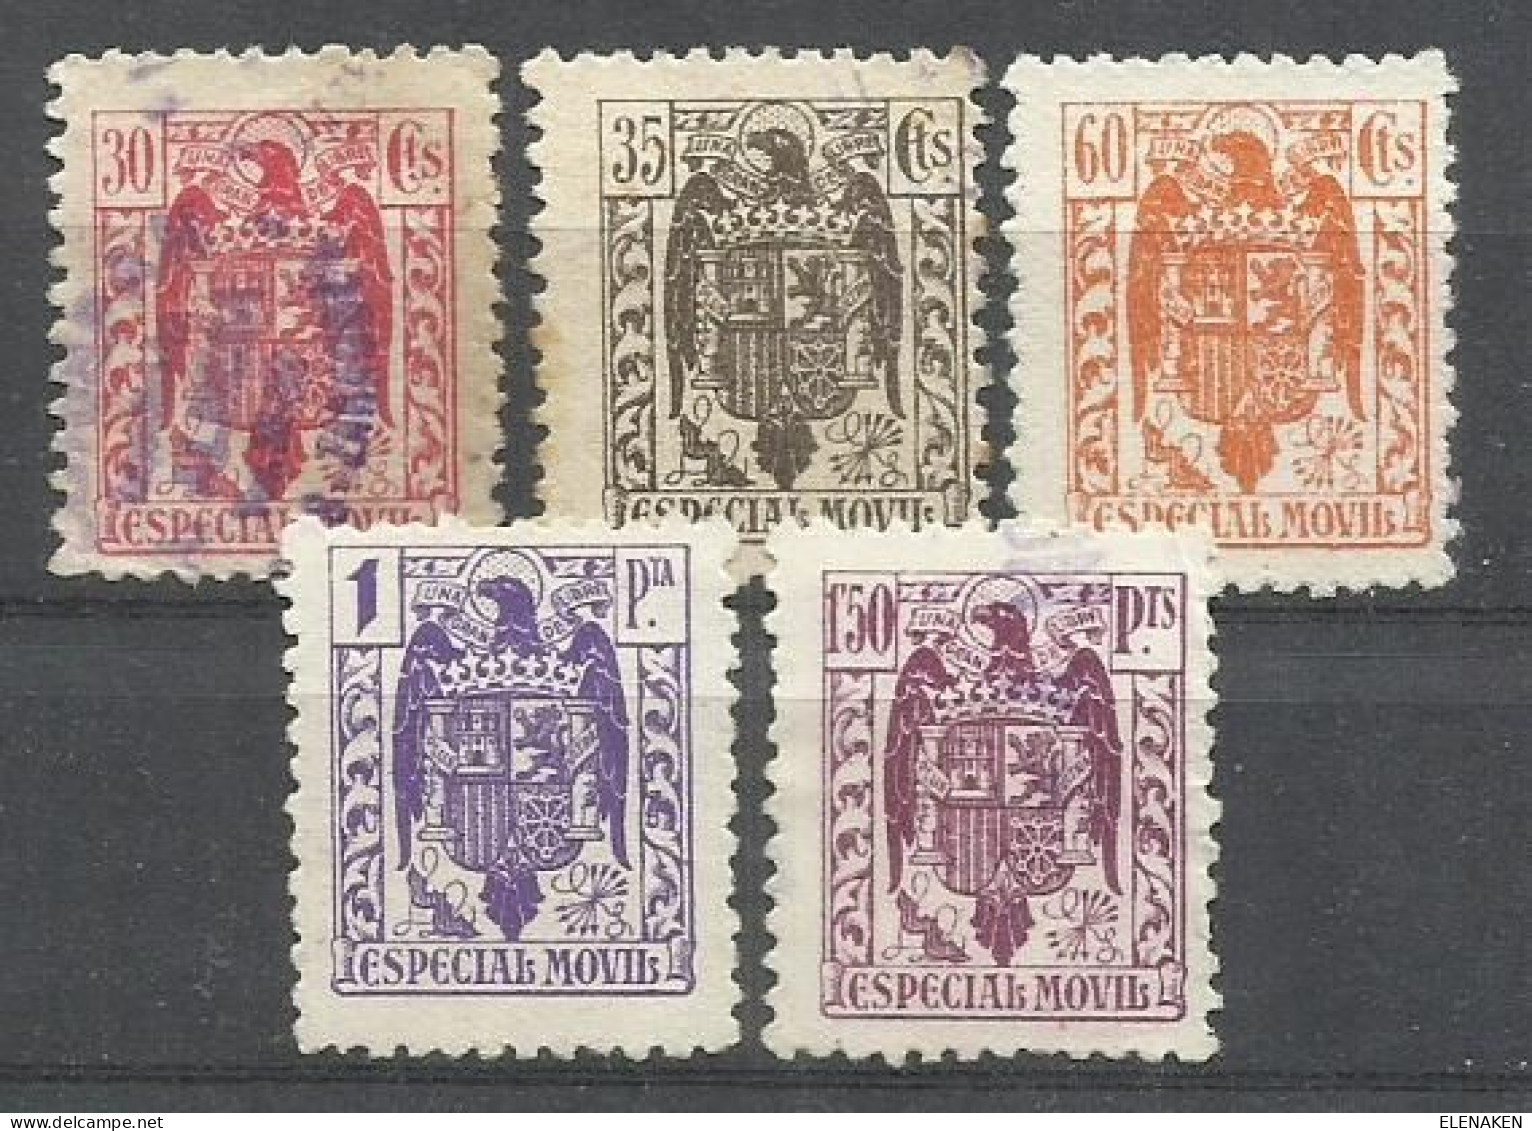 8231-SELLOS FISCALES 1939.SIN PIE DE IMPRENTA 26,00€,SOBRE FRAGMENTO ORIGINAL.SPAIN REVENUE FISCAUX STEMPELMARKEN.	DICTA - Revenue Stamps